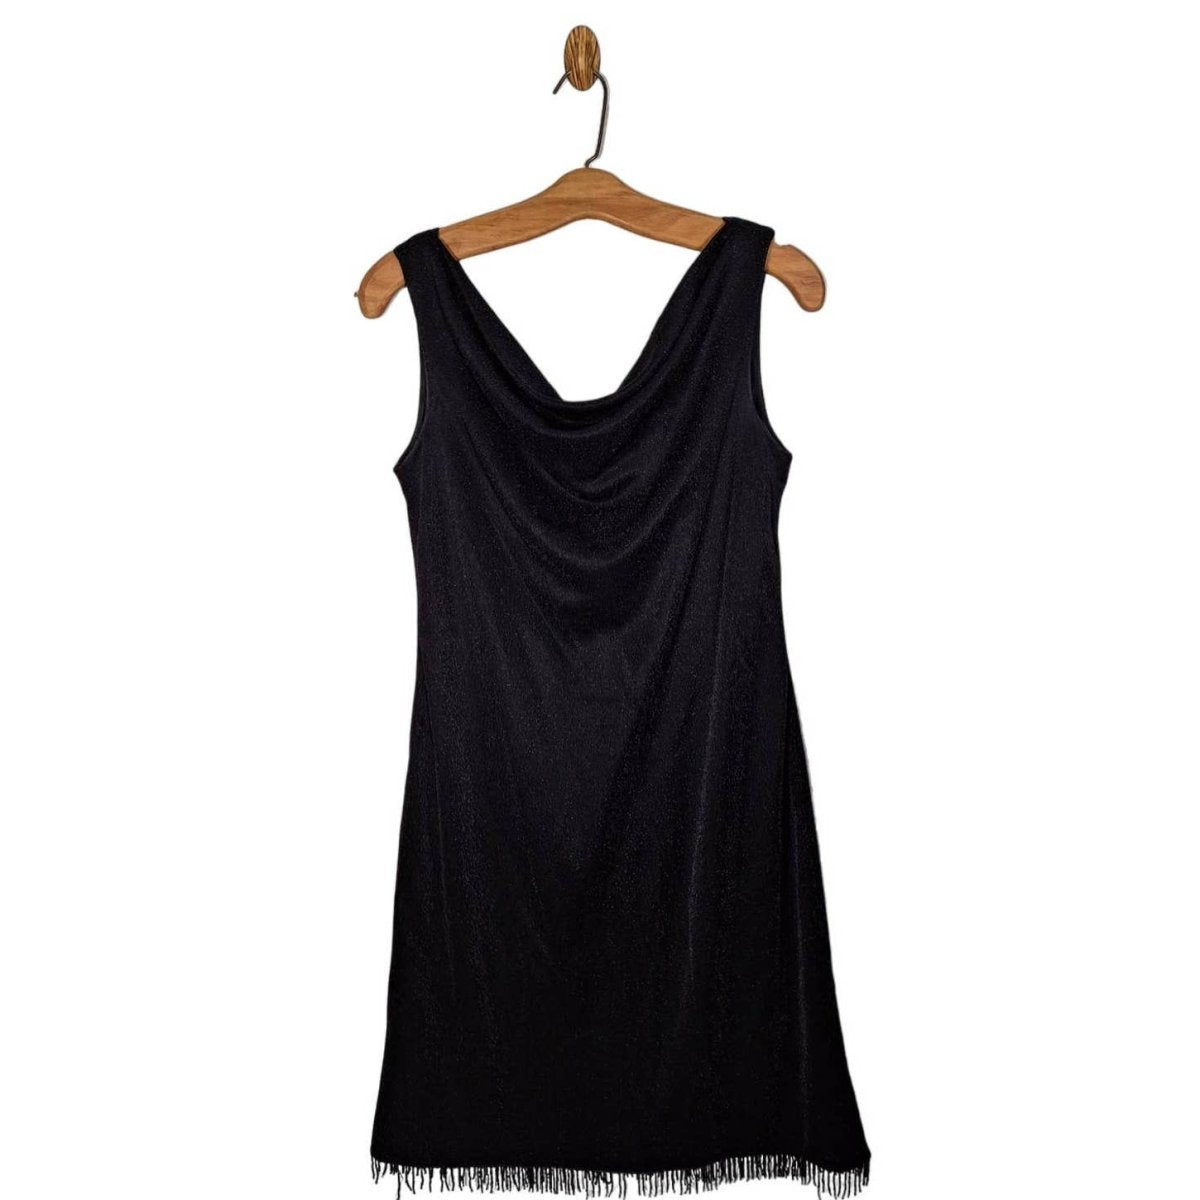 Vintage 80s Black Metallic Cowl Neck Party Dress Size 6 S/M - themallvintage The Mall Vintage